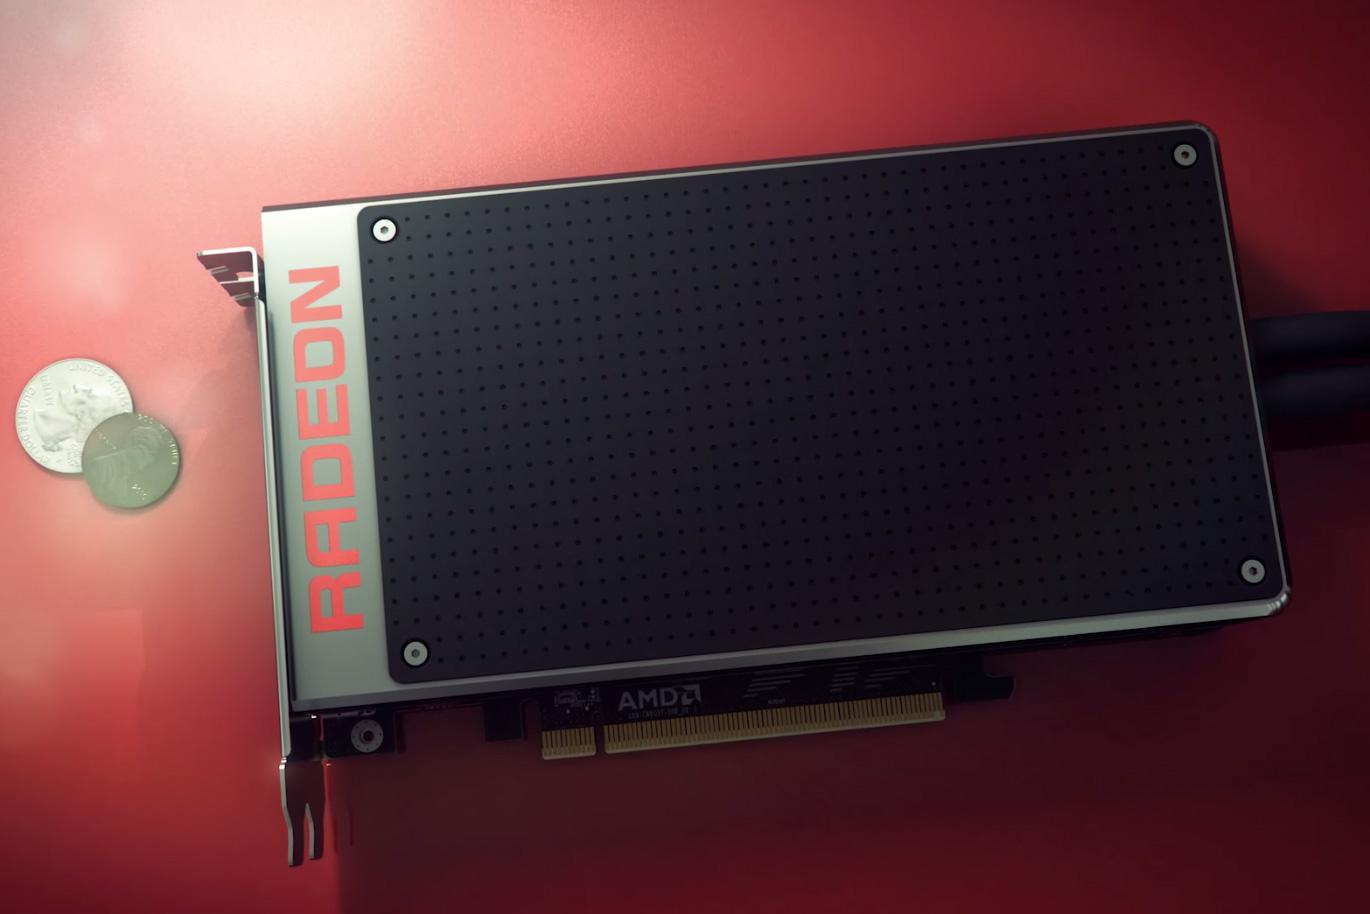 AMD Radeon R9